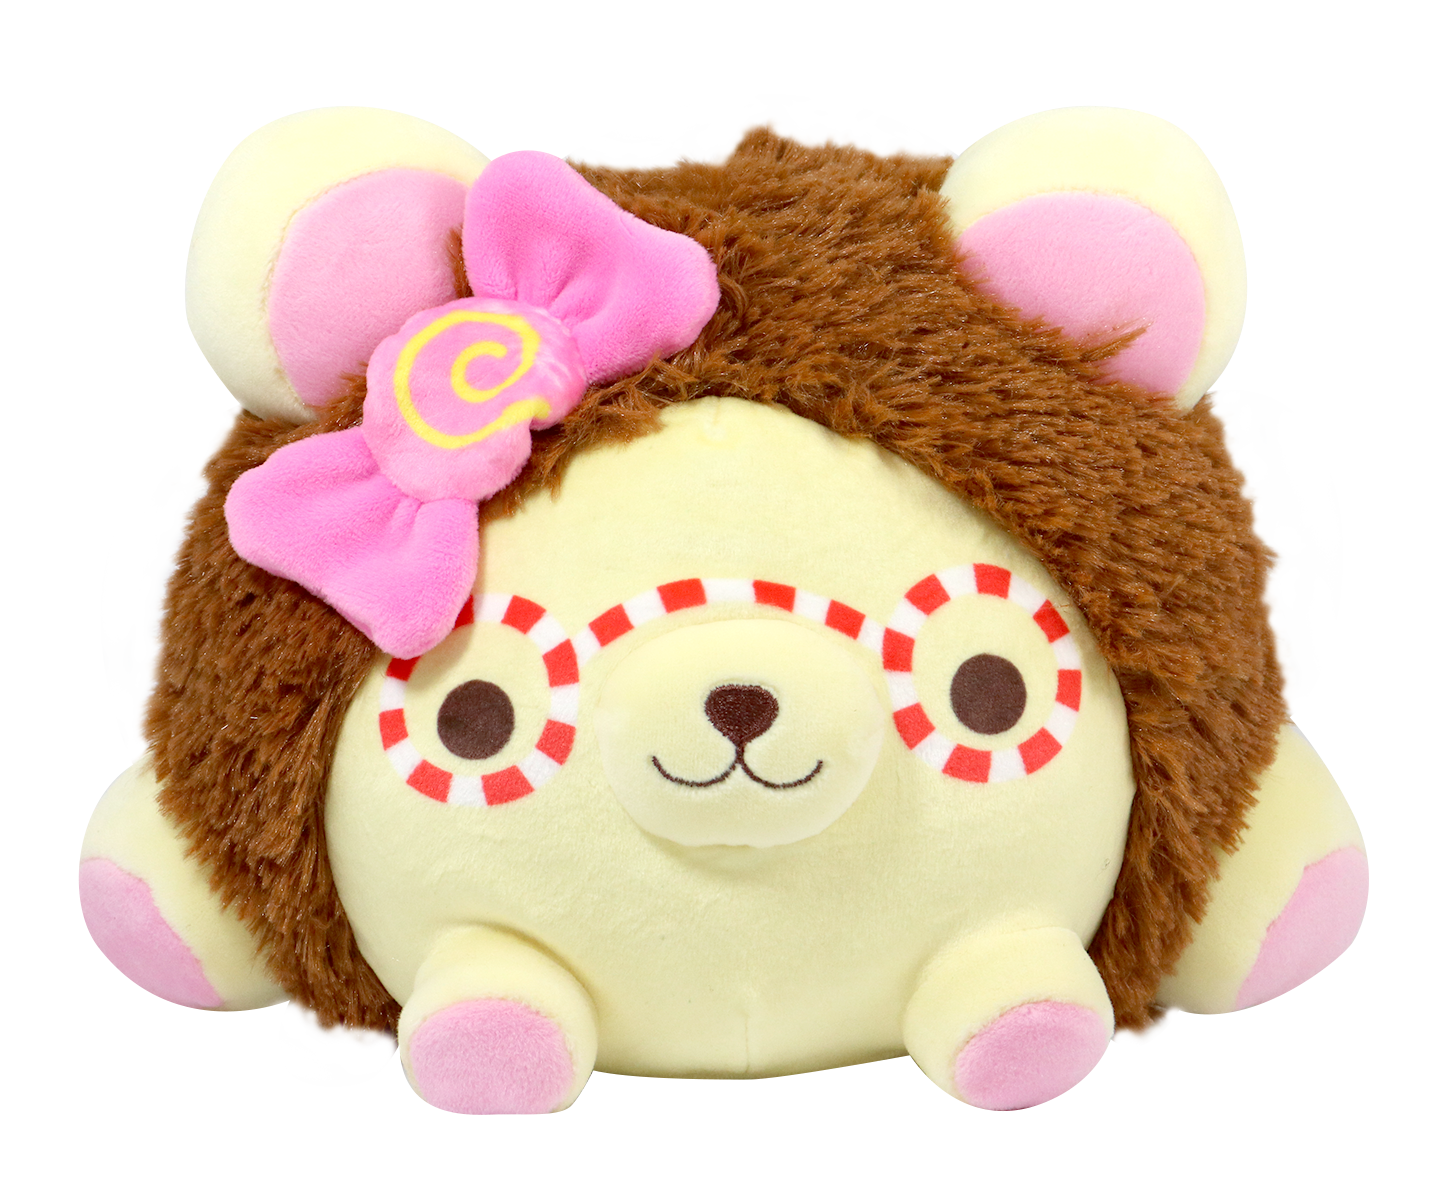 smooshy mushy stuffed animal